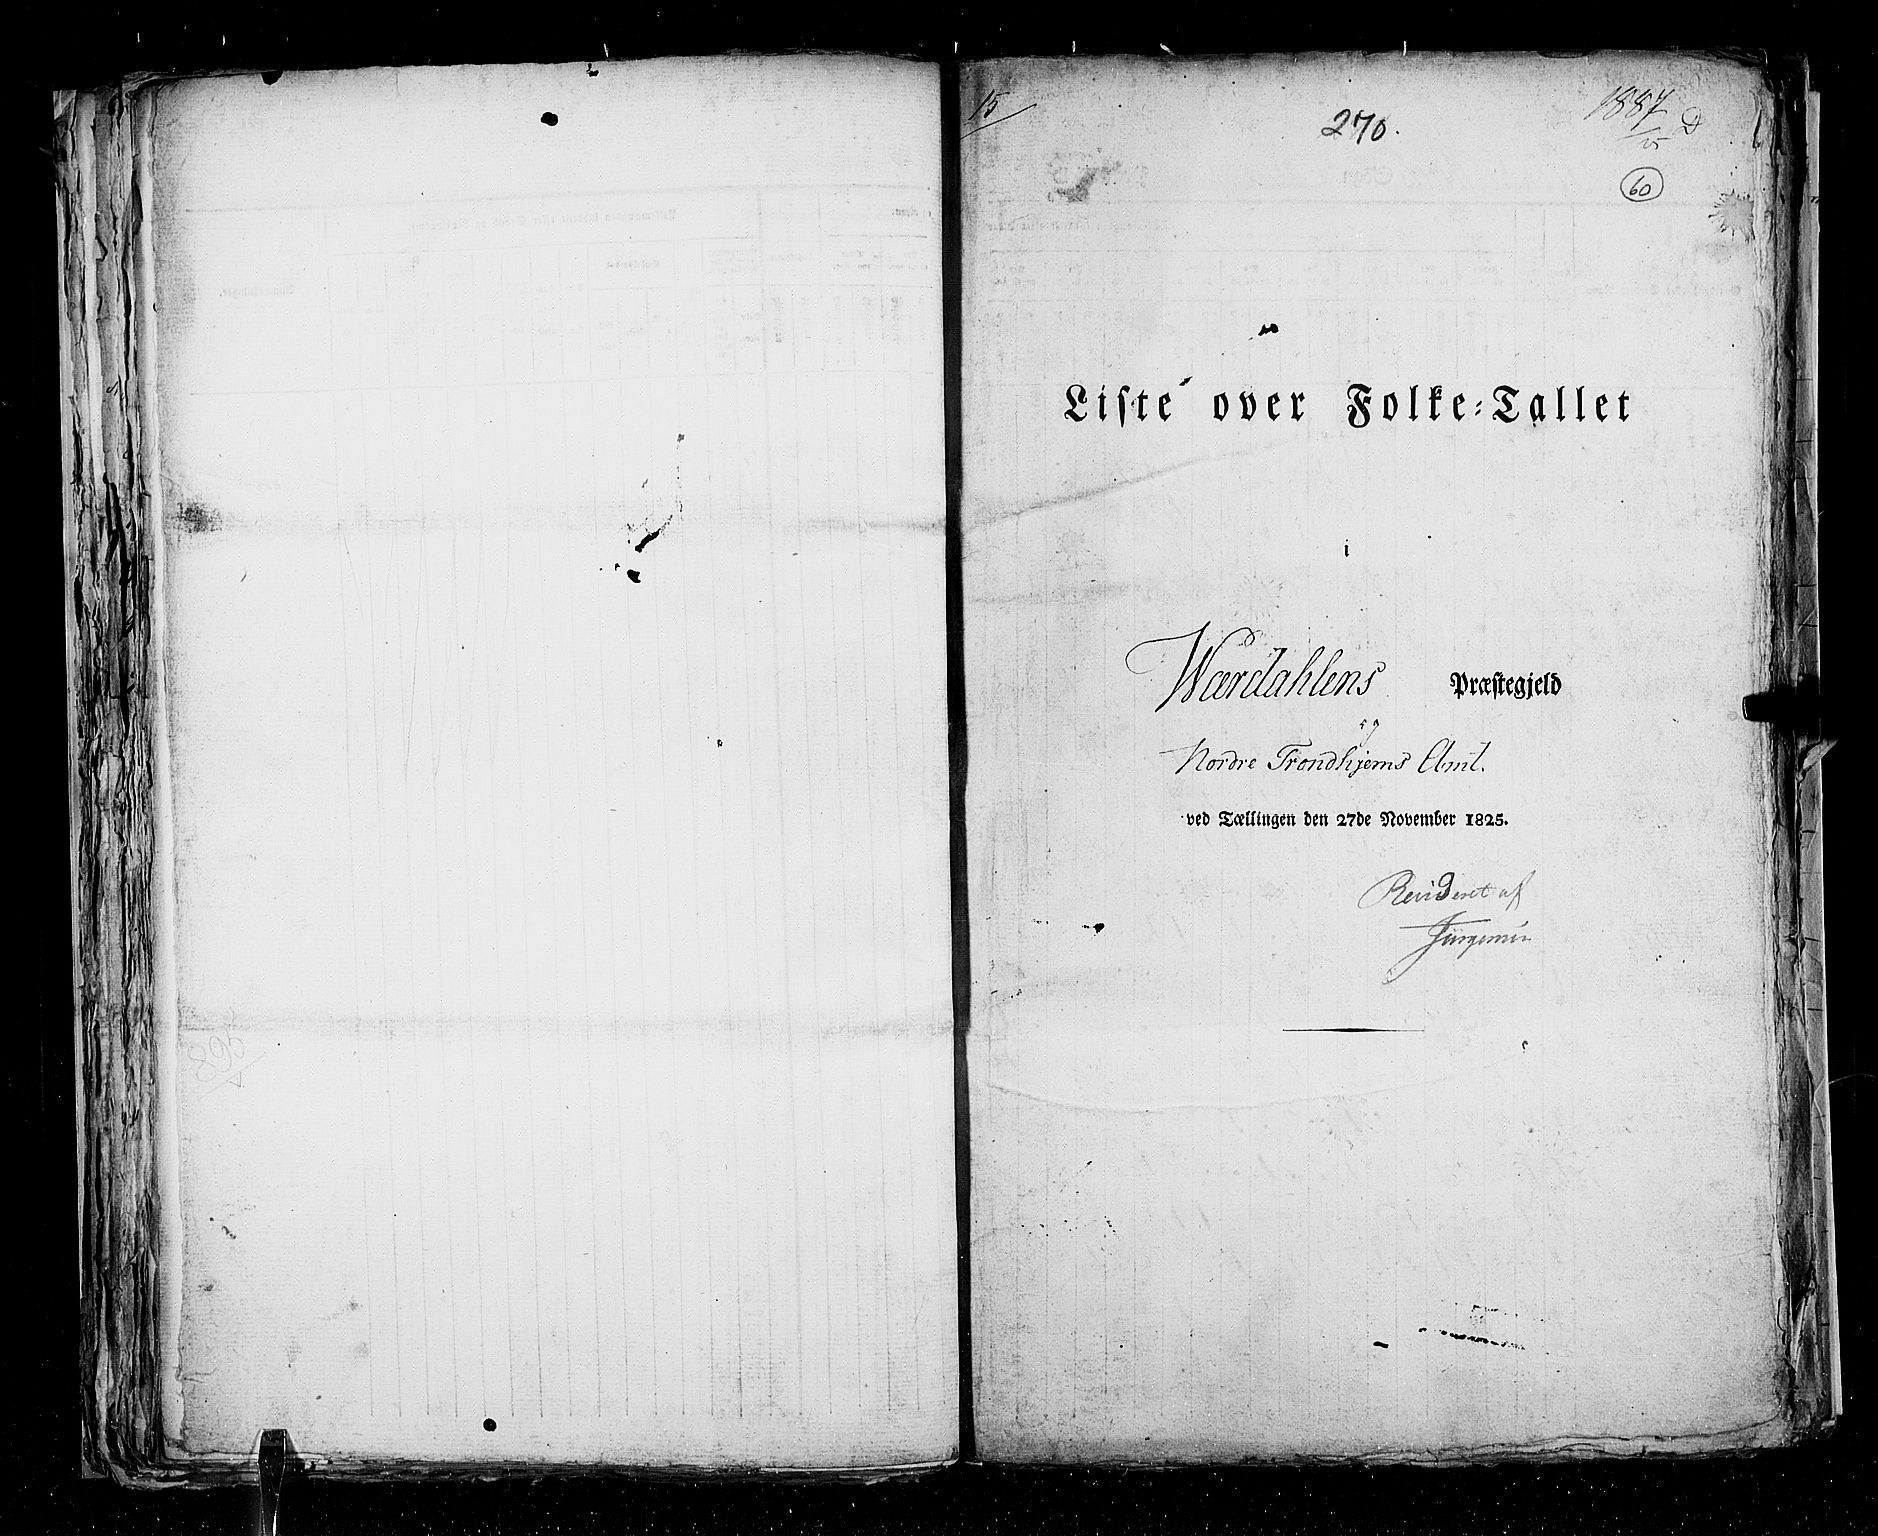 RA, Census 1825, vol. 17: Nordre Trondhjem amt, 1825, p. 60